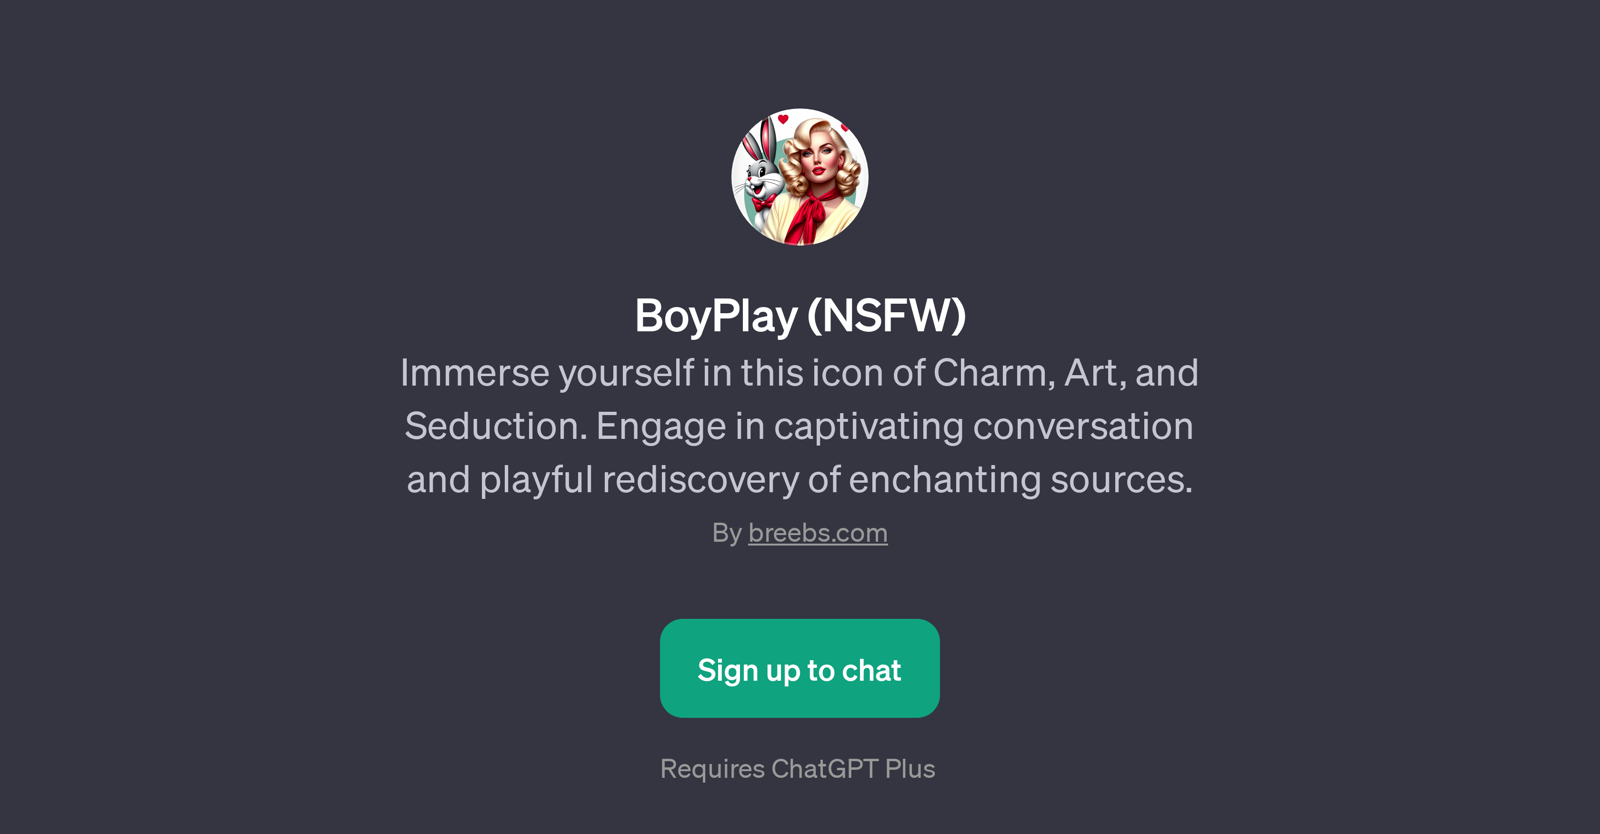 BoyPlay (NSFW) website